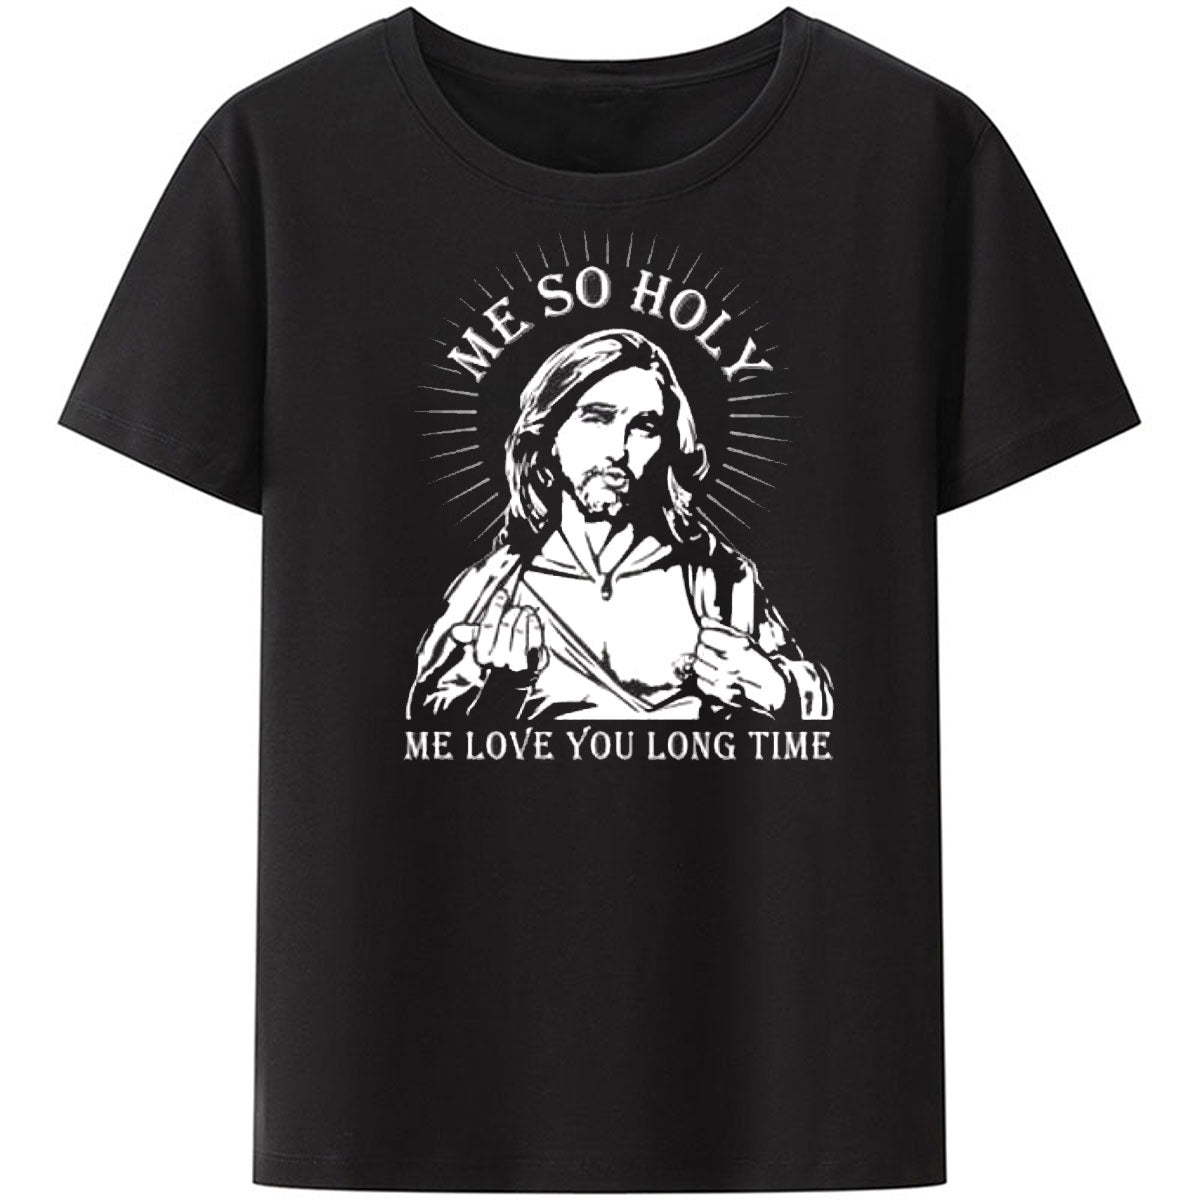 Christianartbag Funny T-Shirt, Me So Holy Me Love You Long TIme, Christian humor, Funny religious shirts, Unisex T-shirt. - Christian Art Bag